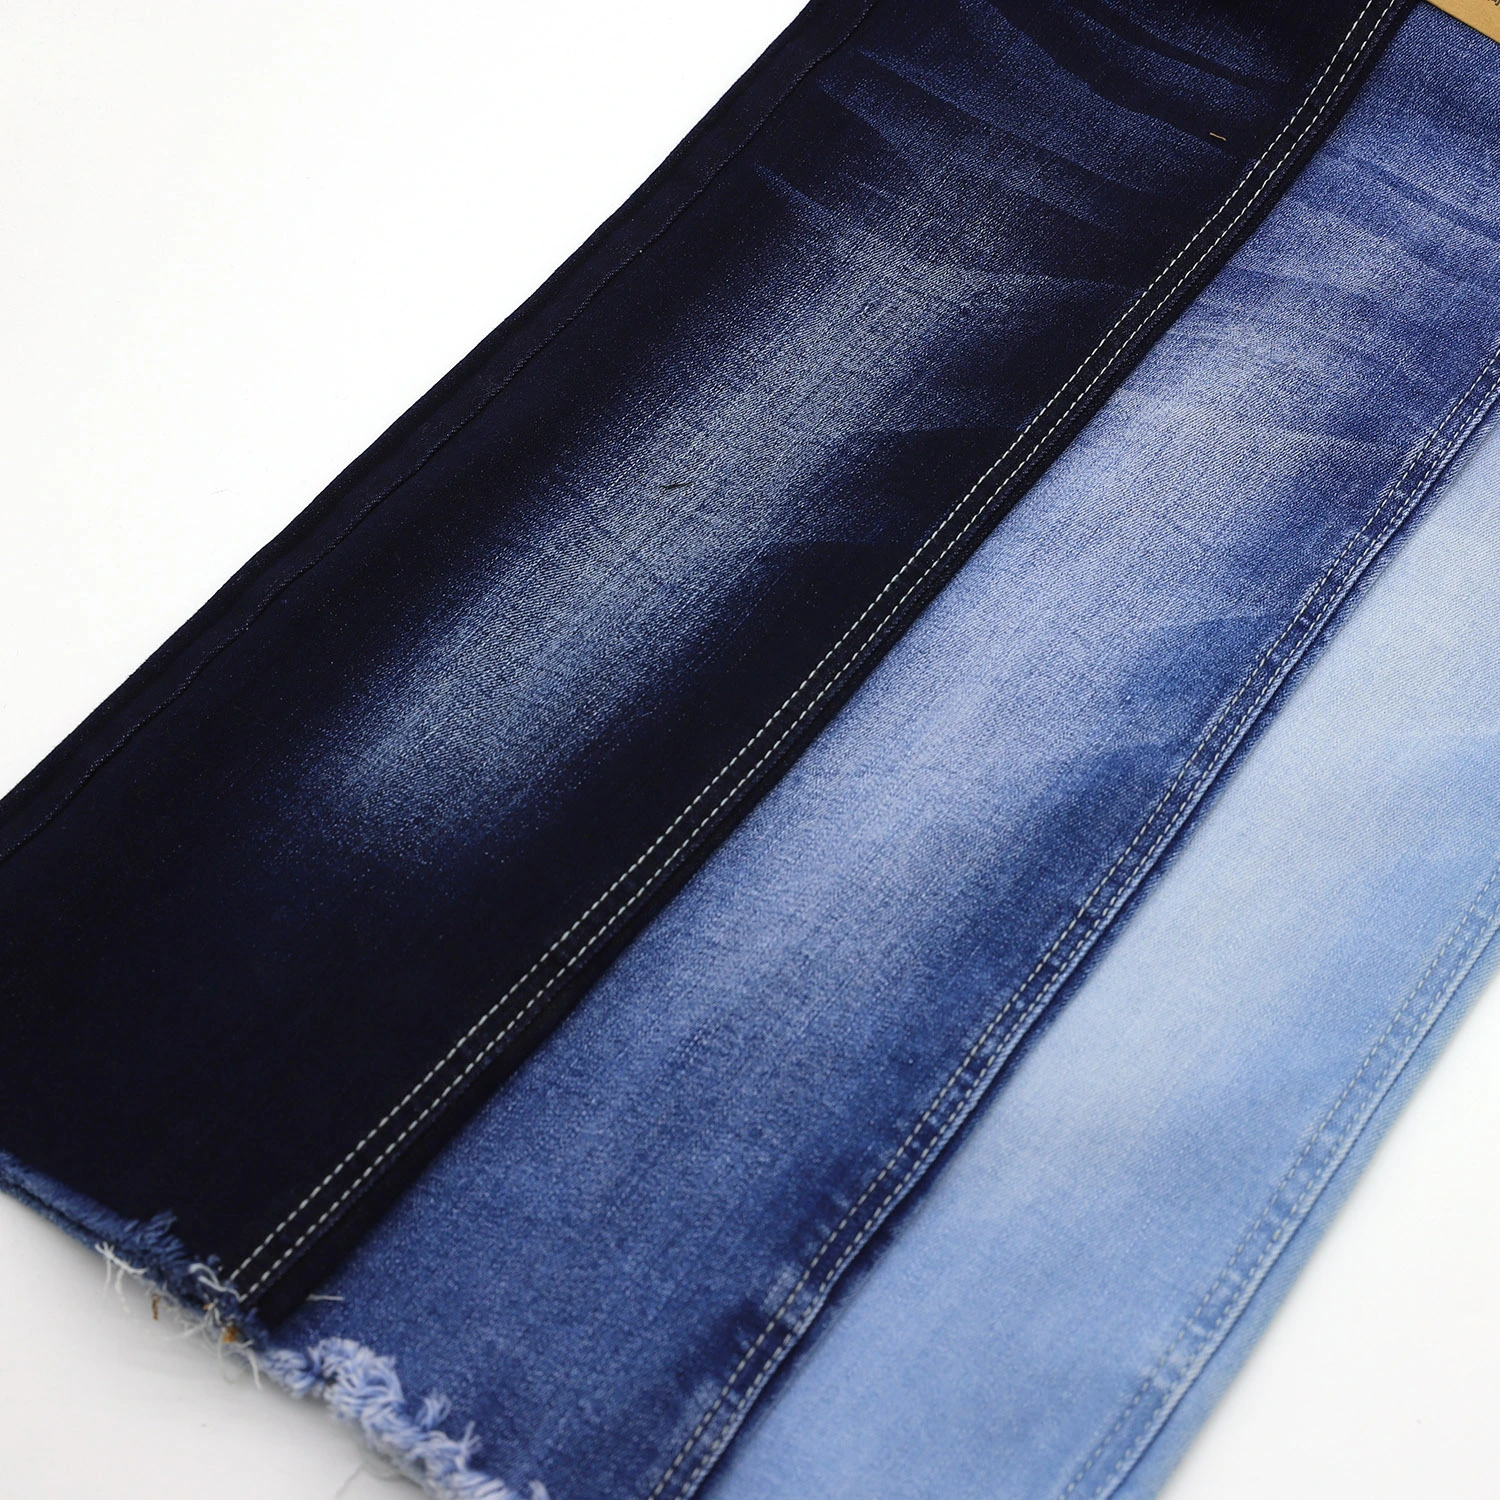 308A-13 Super stretch denim fabric with 68.5%Cotton  28%Poly 3.5%Spandex 4